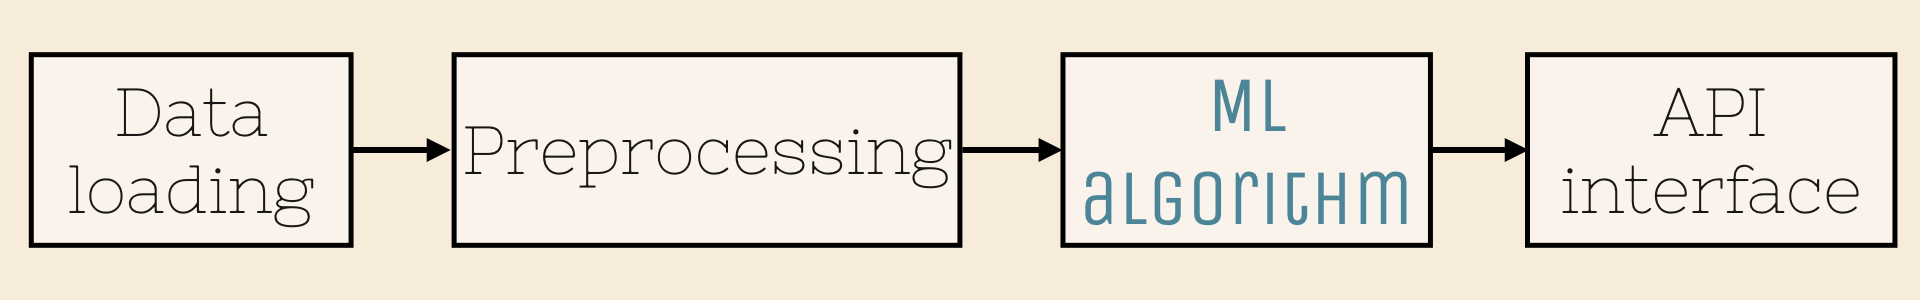 data loading -> preprocessing -> ML algorithm -> API interface